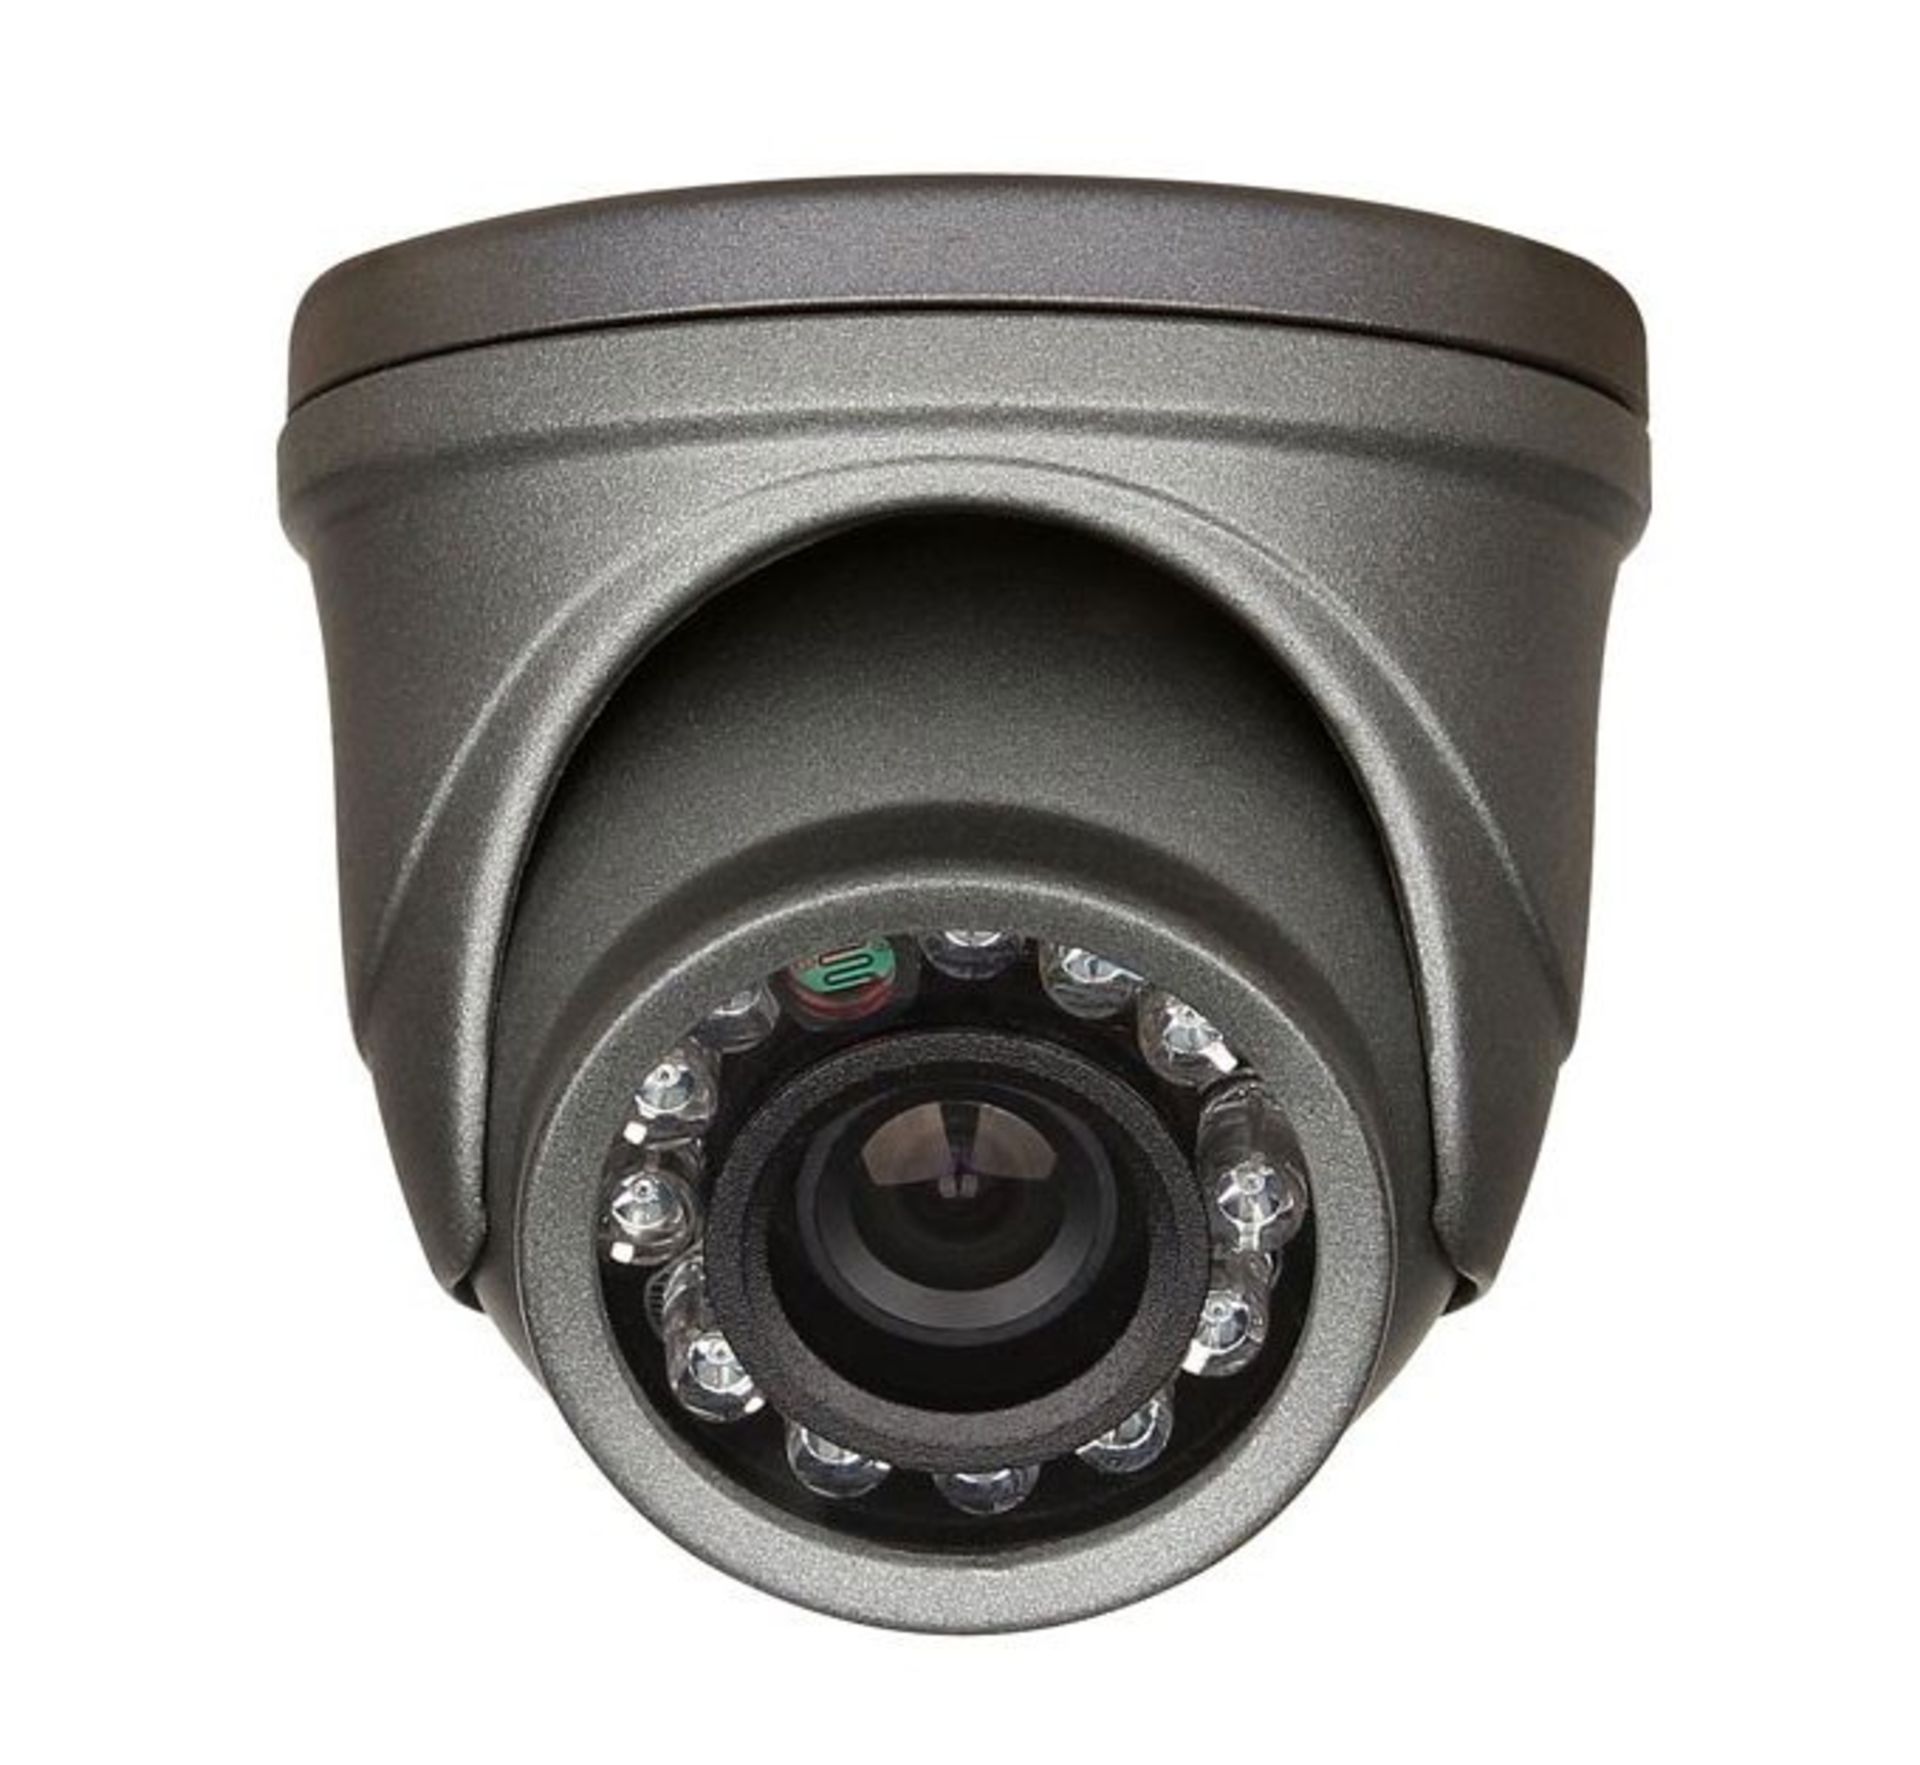 V *TRADE QTY* Brand New Avtech IR Vandalproof Dome Camera - 1/3" Sony Colour480TVL Lense - Online